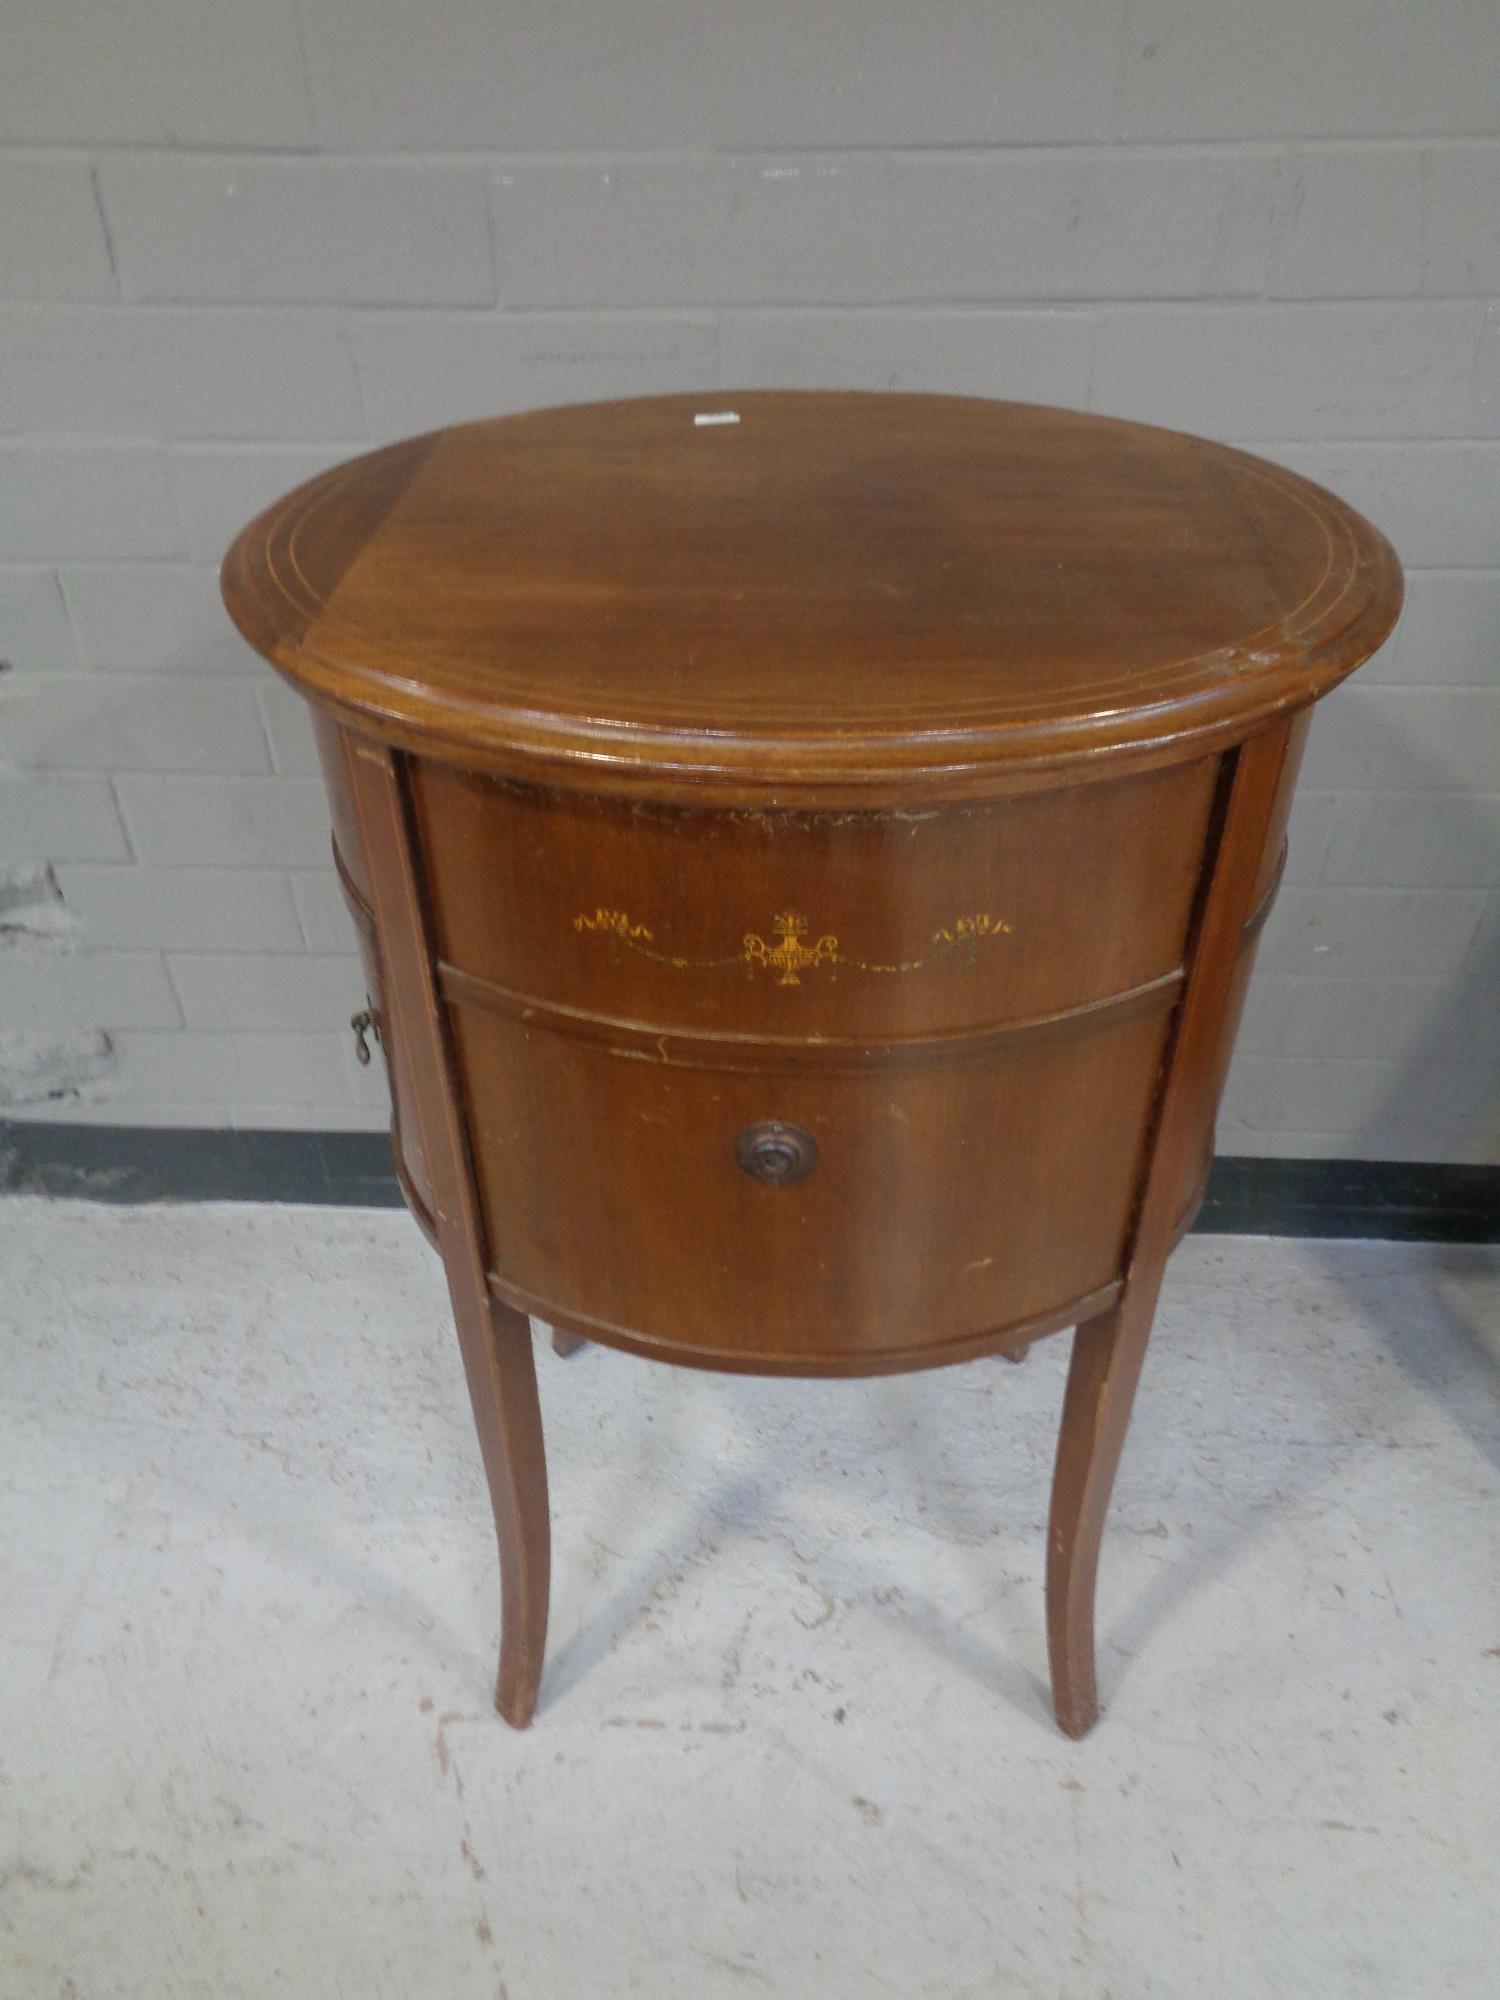 An antique inlaid mahogany gramophone cabinet on raised legs